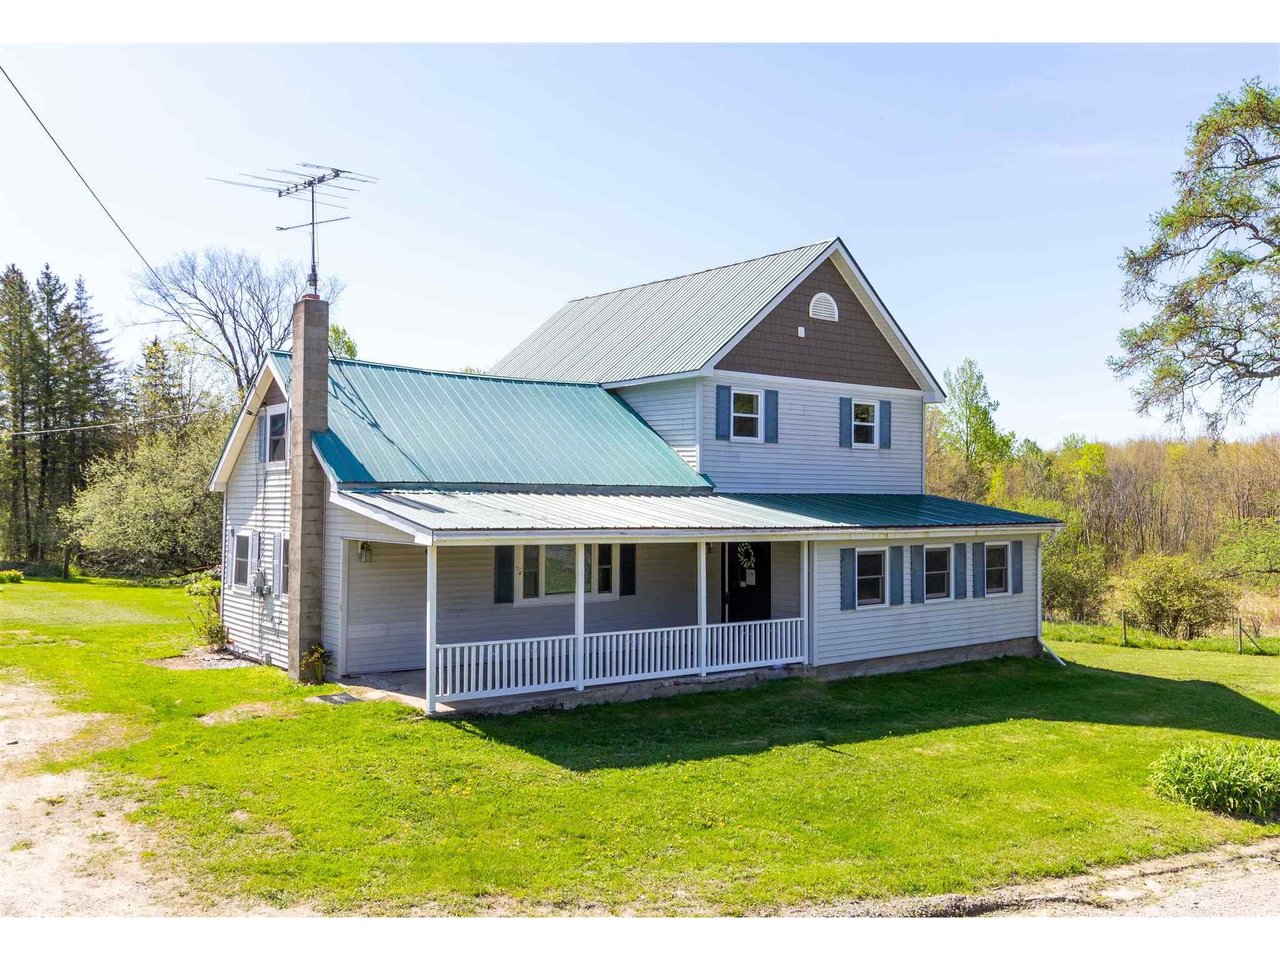 1205 Reynolds Road Fairfield, Vermont - Sold in 2020